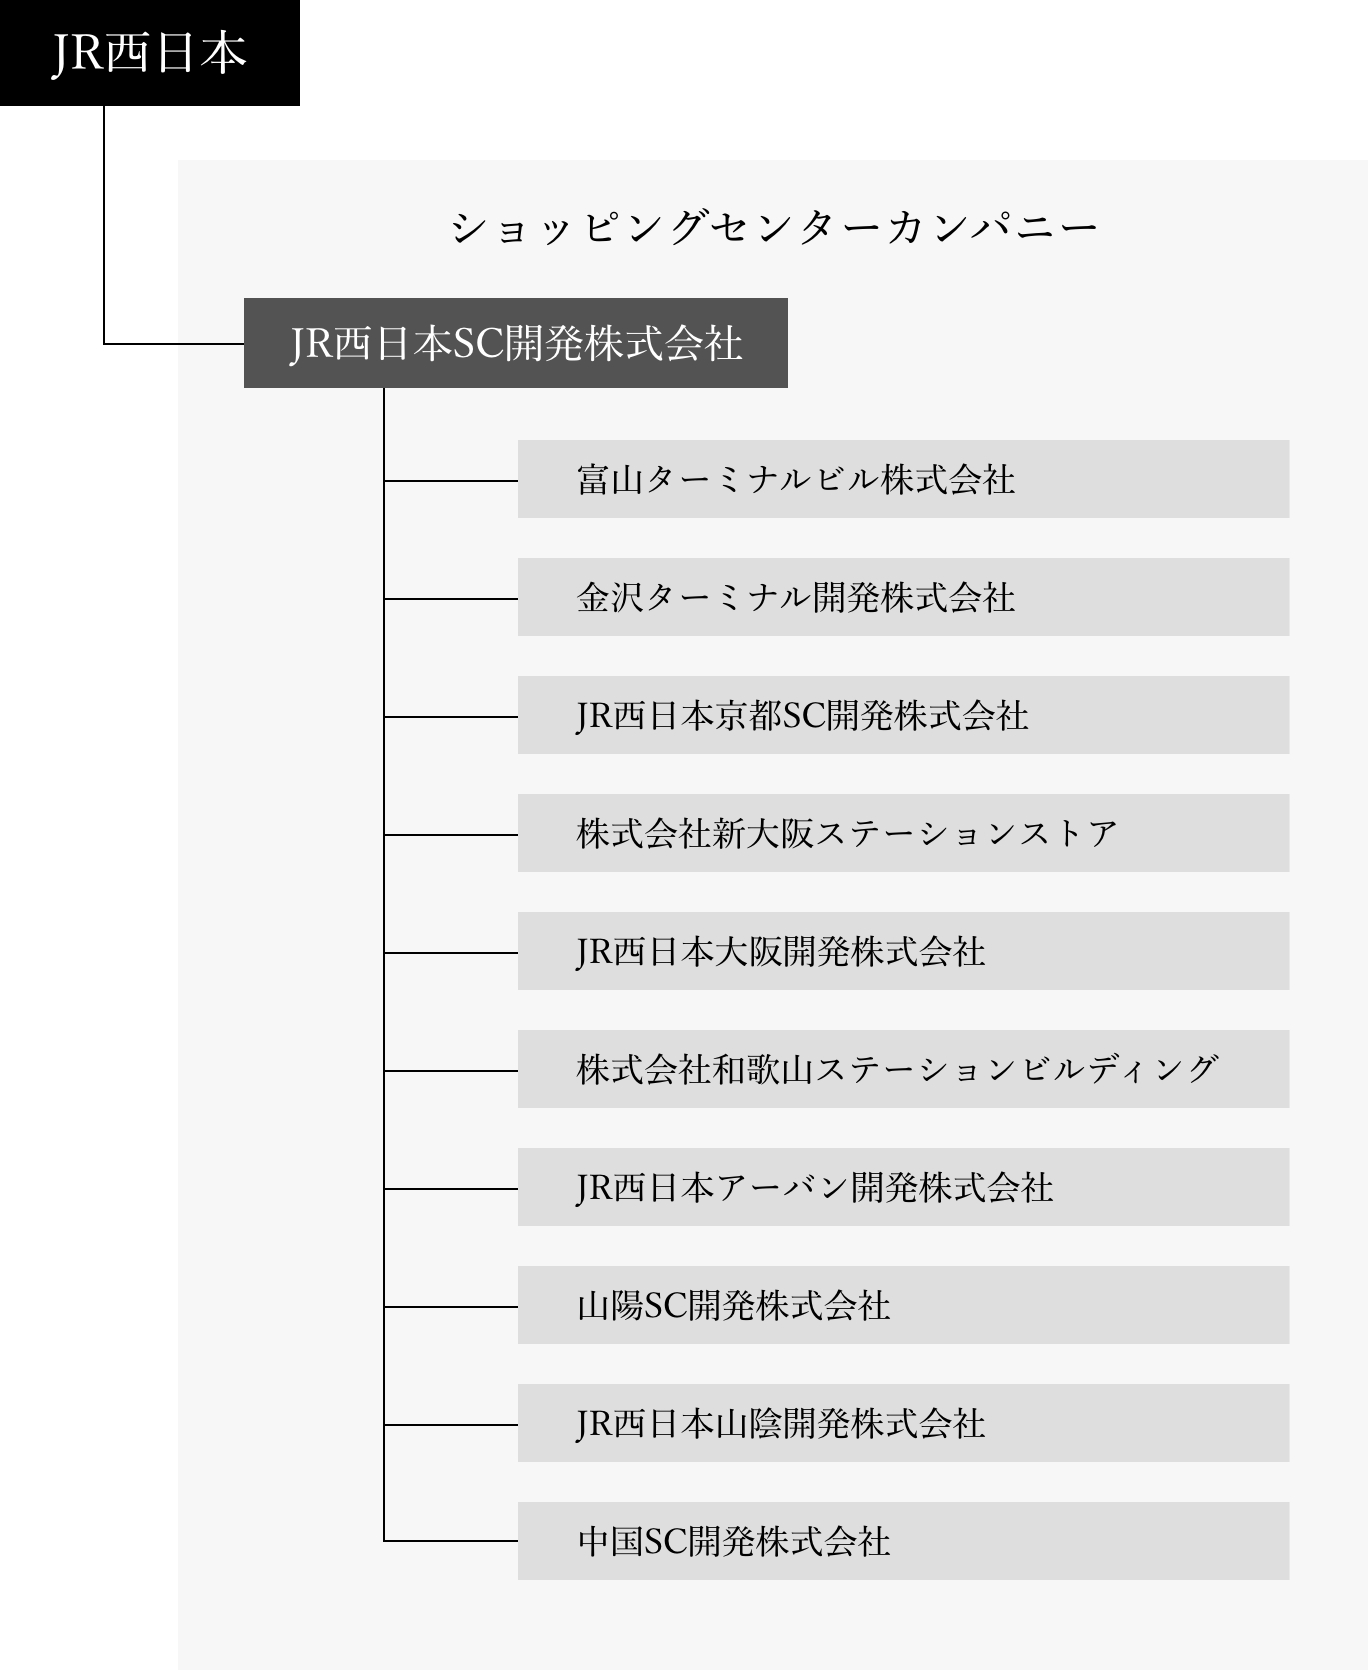 JR西日本ショッピングセンターカンパニー組織図